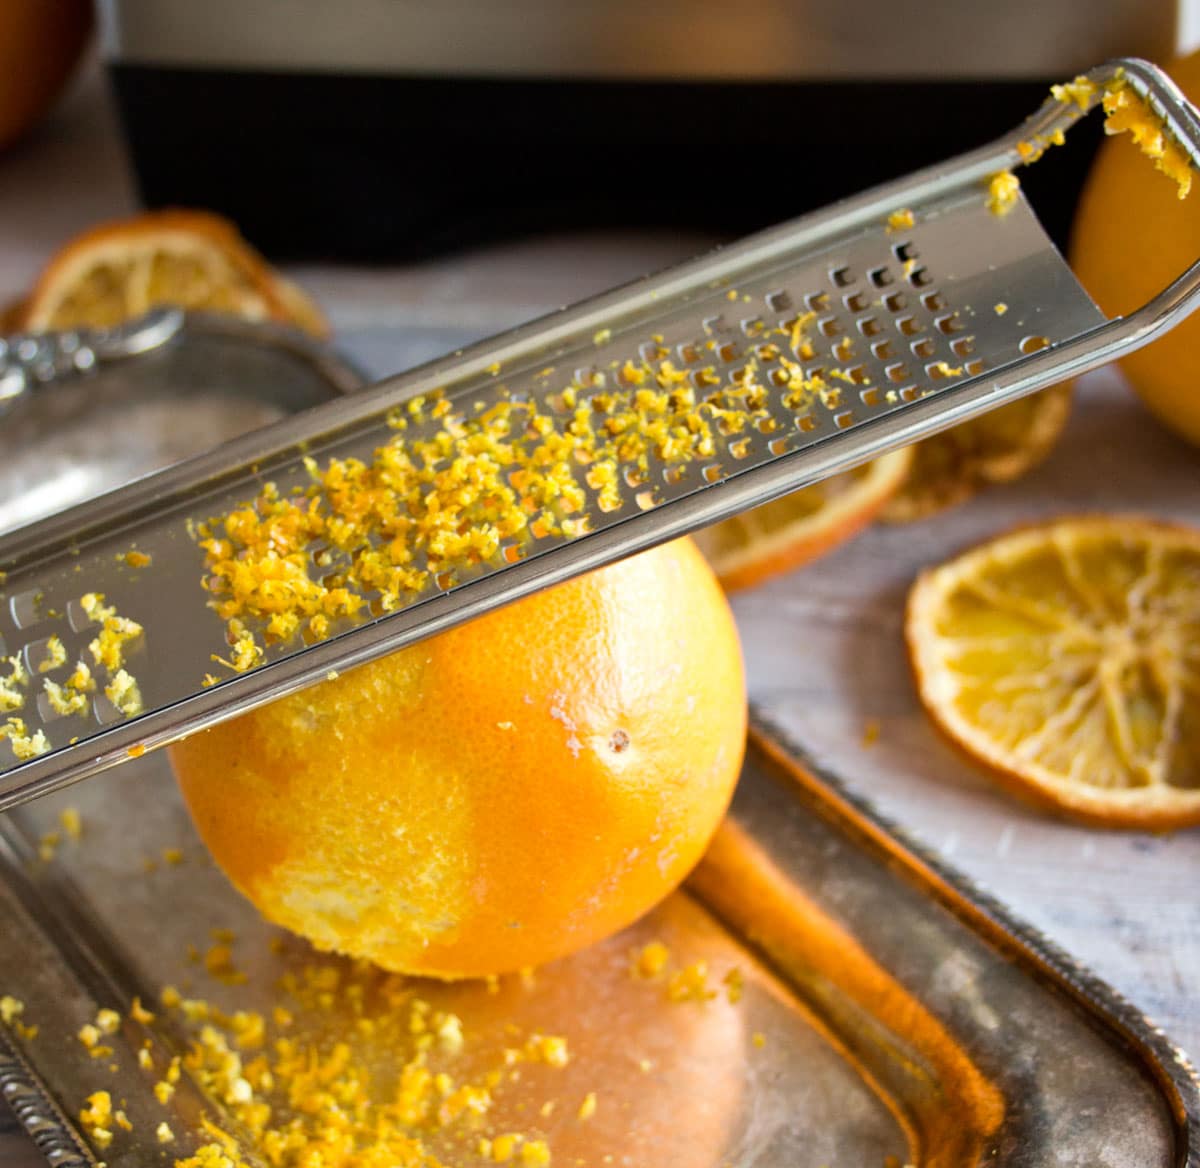 Grating the zest of an orange.